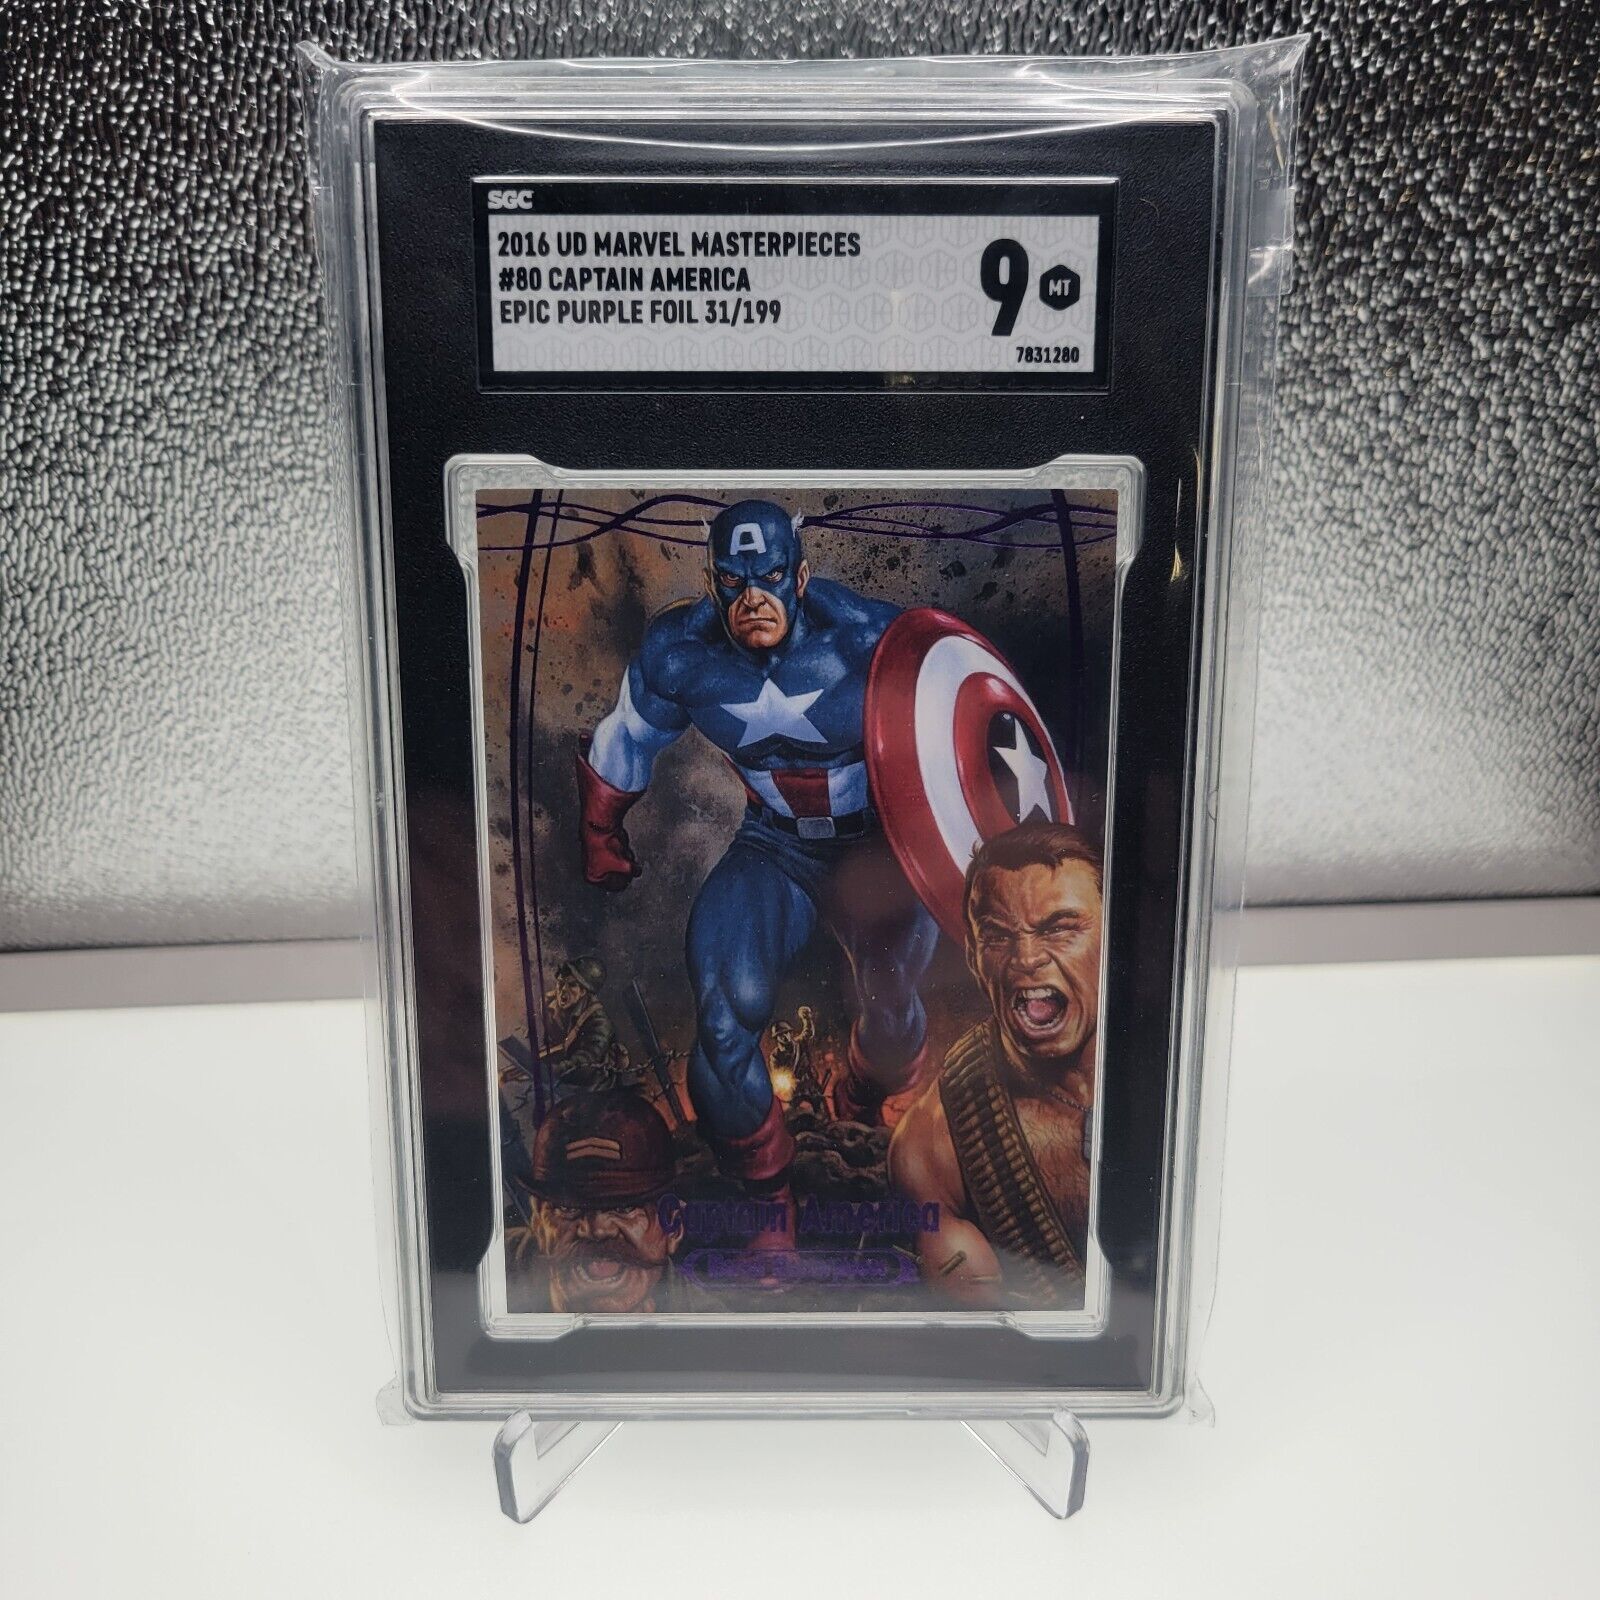 2016 Marvel Masterpieces Captain America #80 Epic Purple Foil 31/199 SGC 9